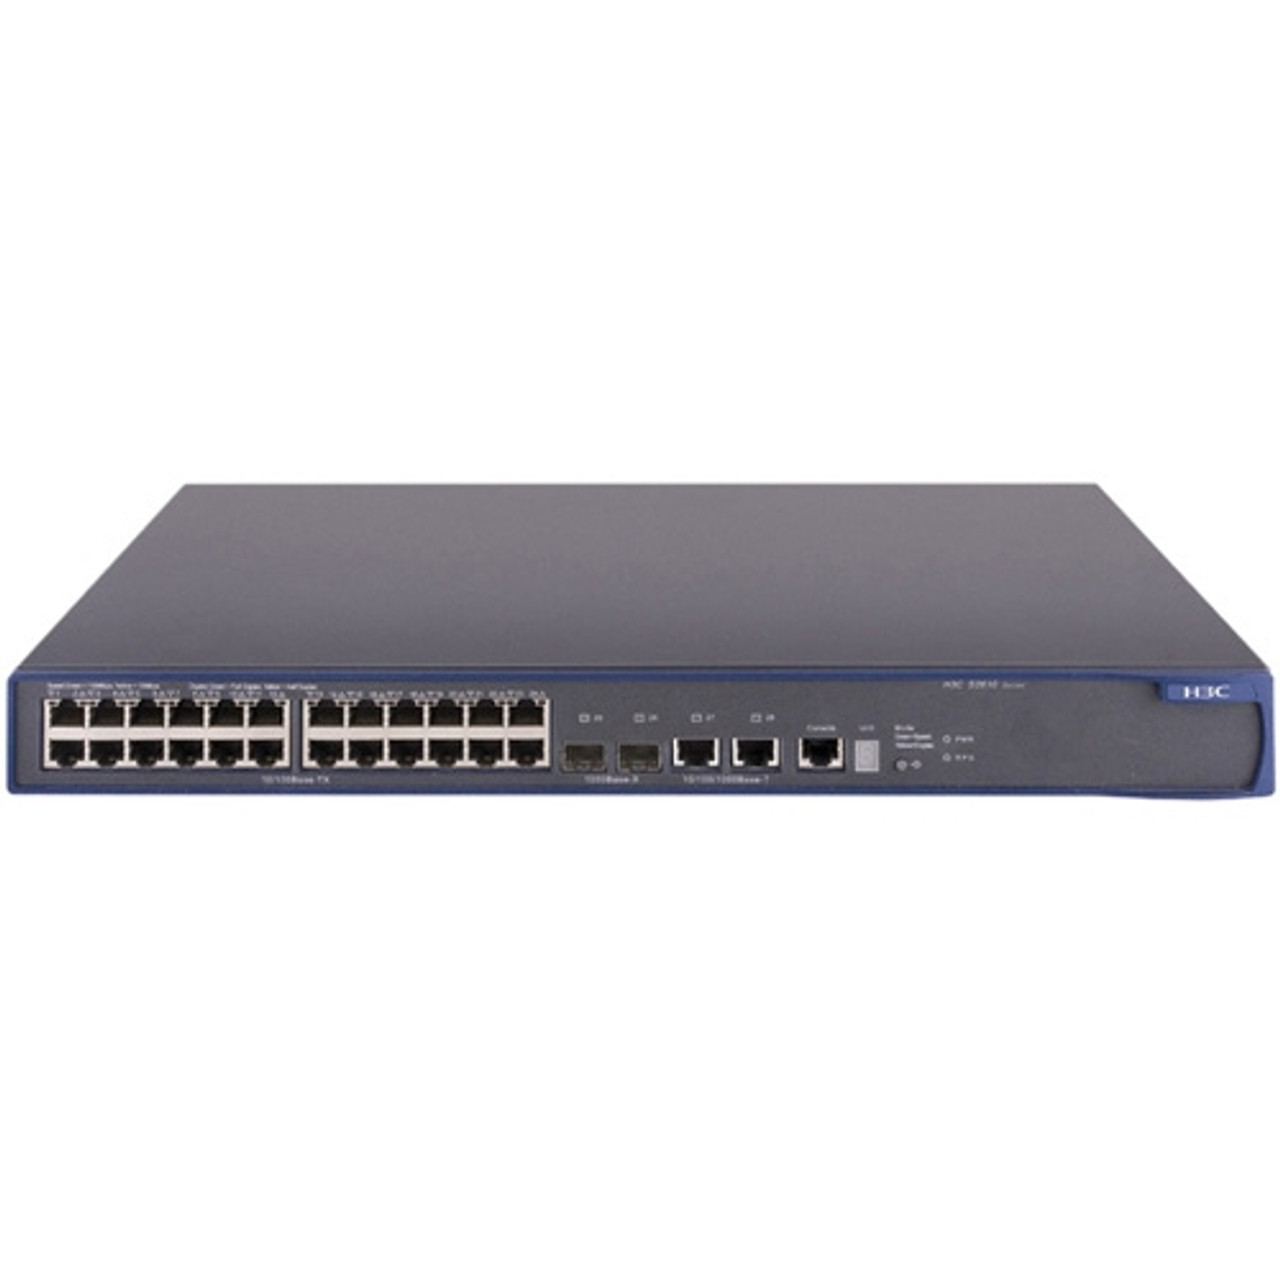 JD337A HP A3610-24 24-Ports SFP Layer 3 Fast Ethernet Switch 1U Rack Mountable (Refurbished)